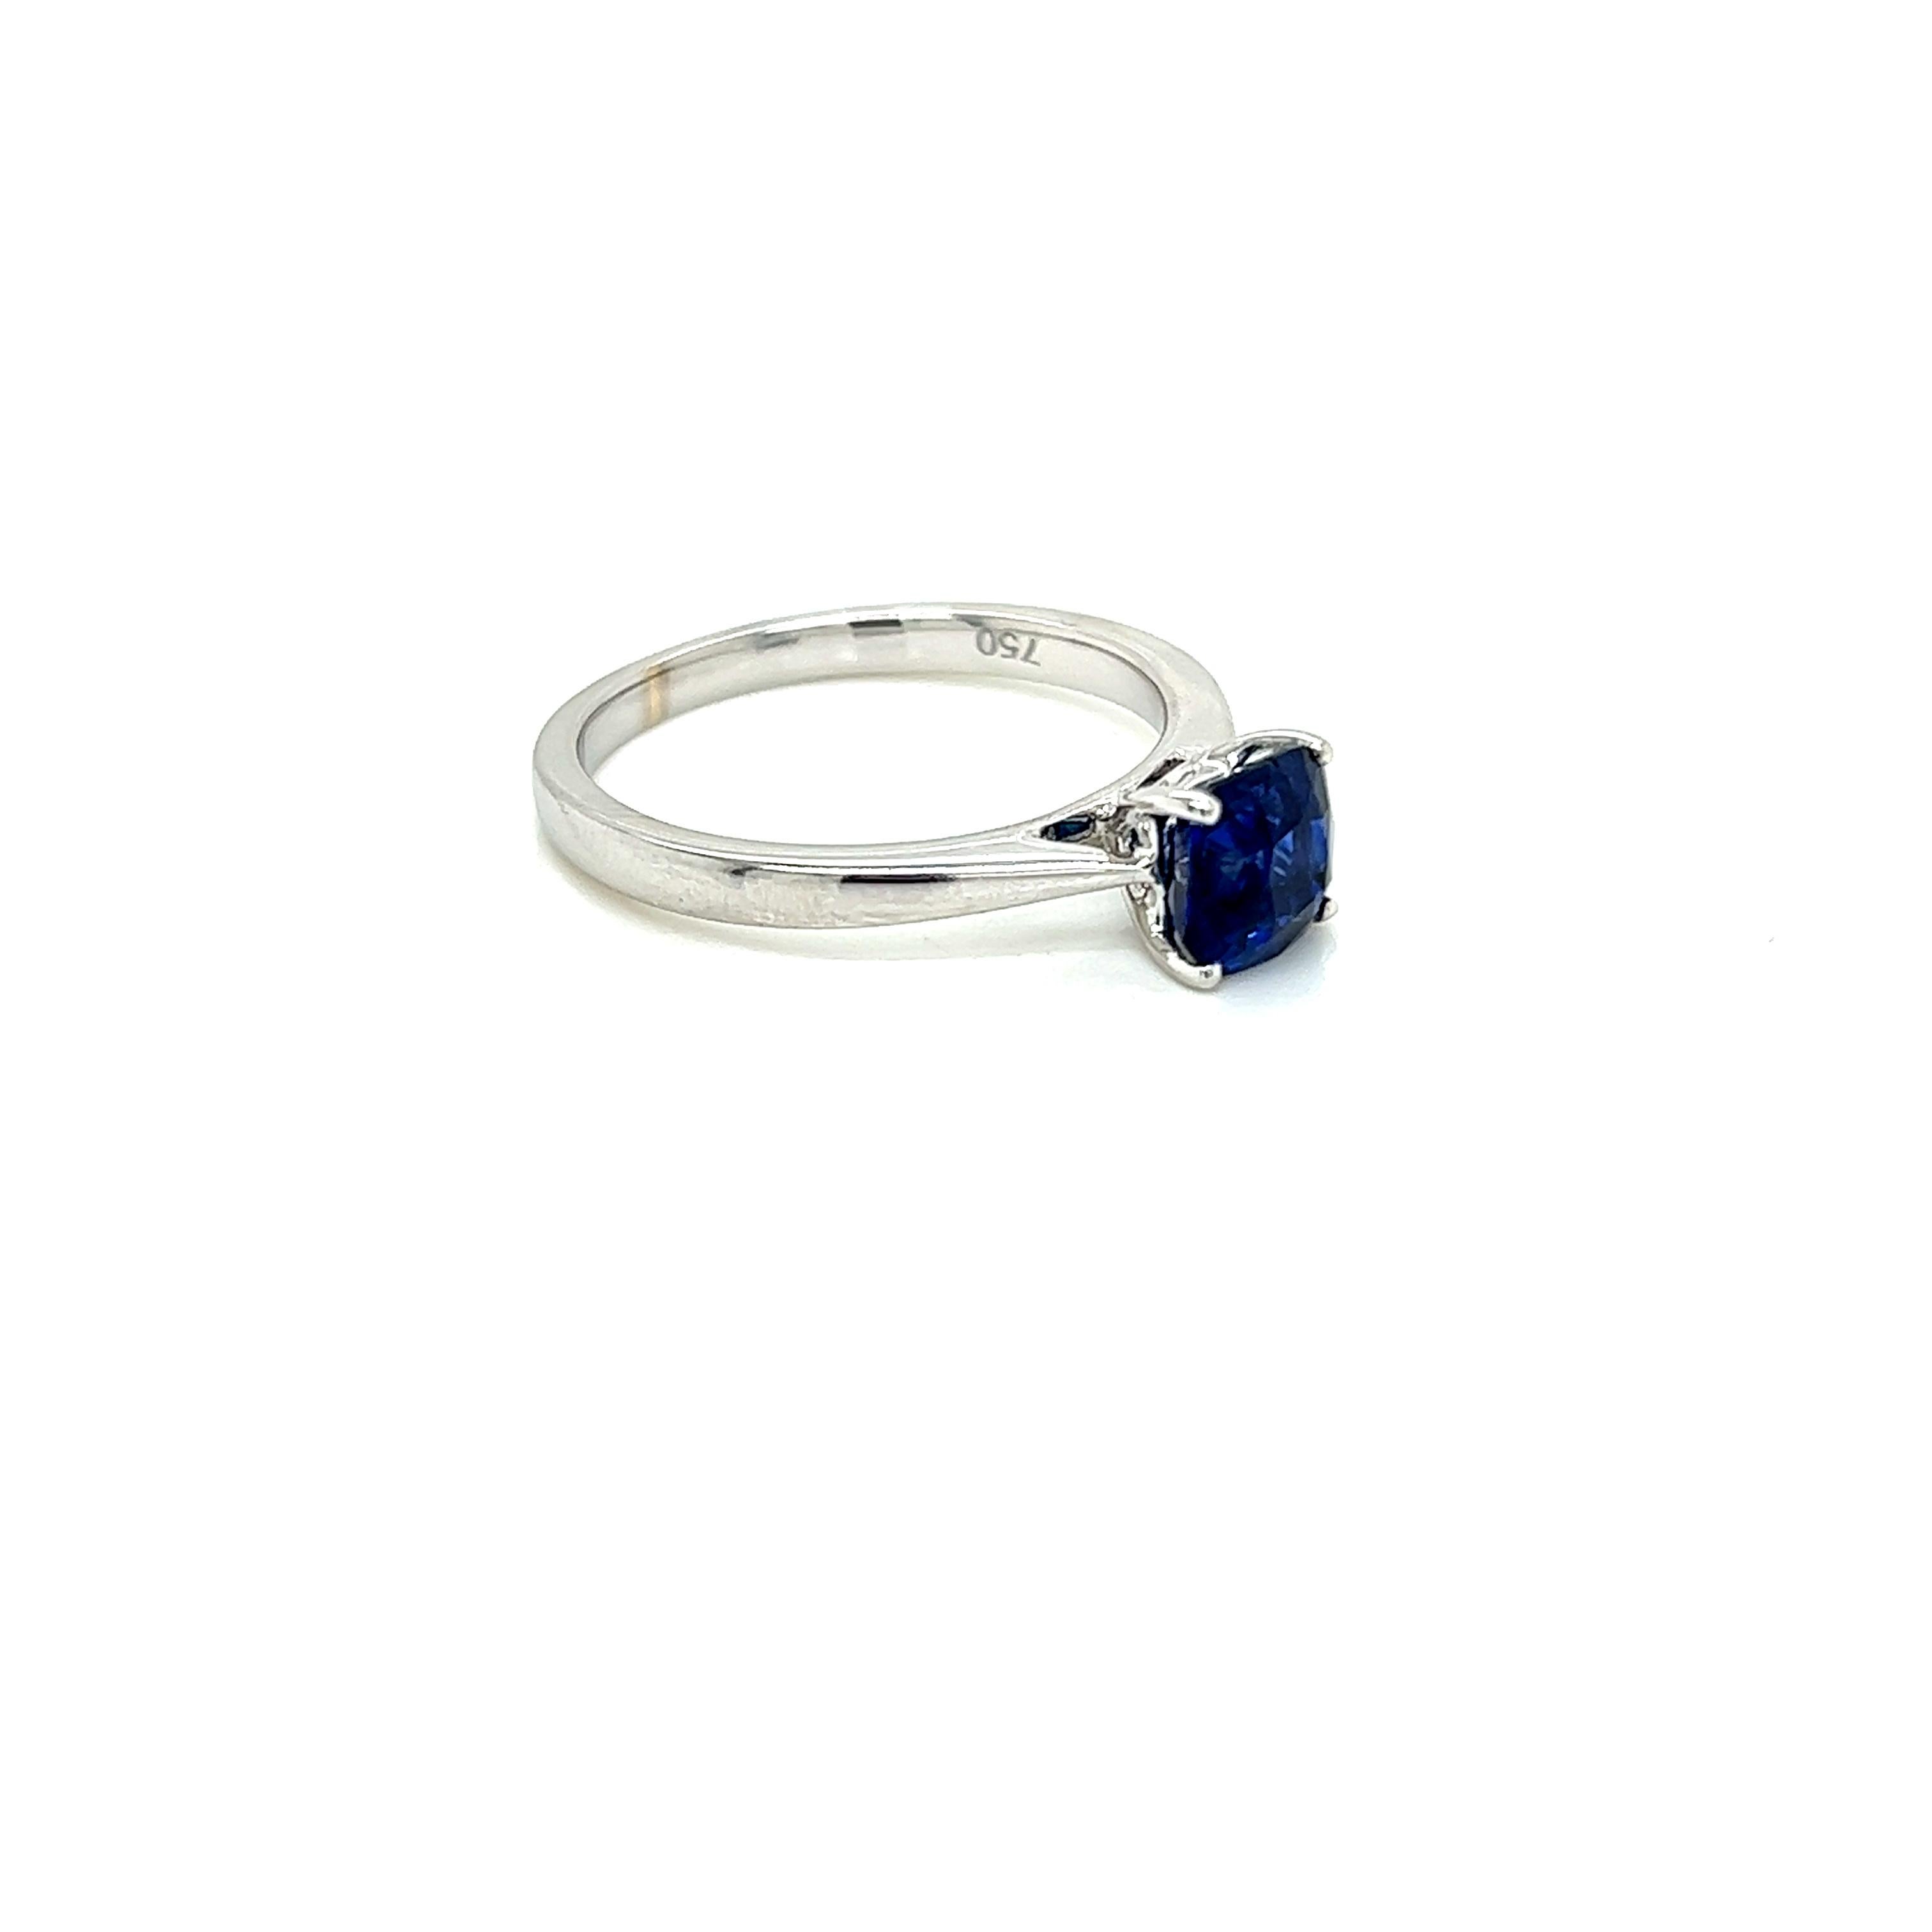 1.28 Carat Cushion cut Blue Sapphire Solitaire Ring in 18K White Gold Neuf - En vente à London, GB